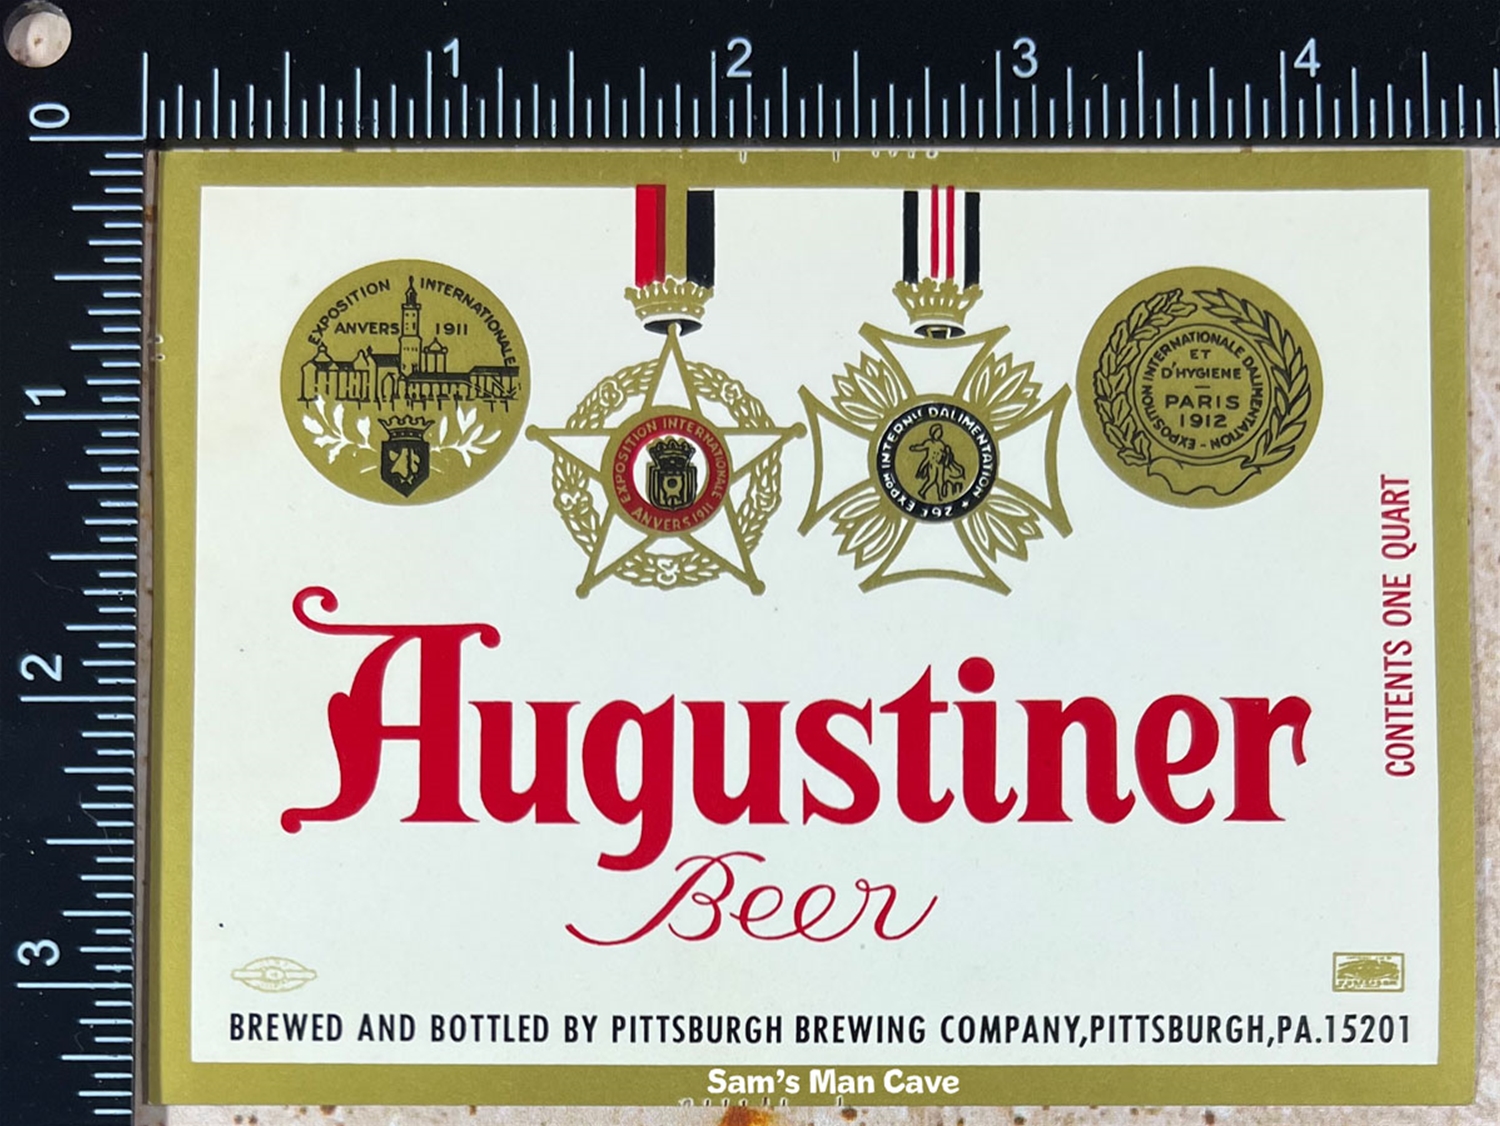 Augustiner Beer Label